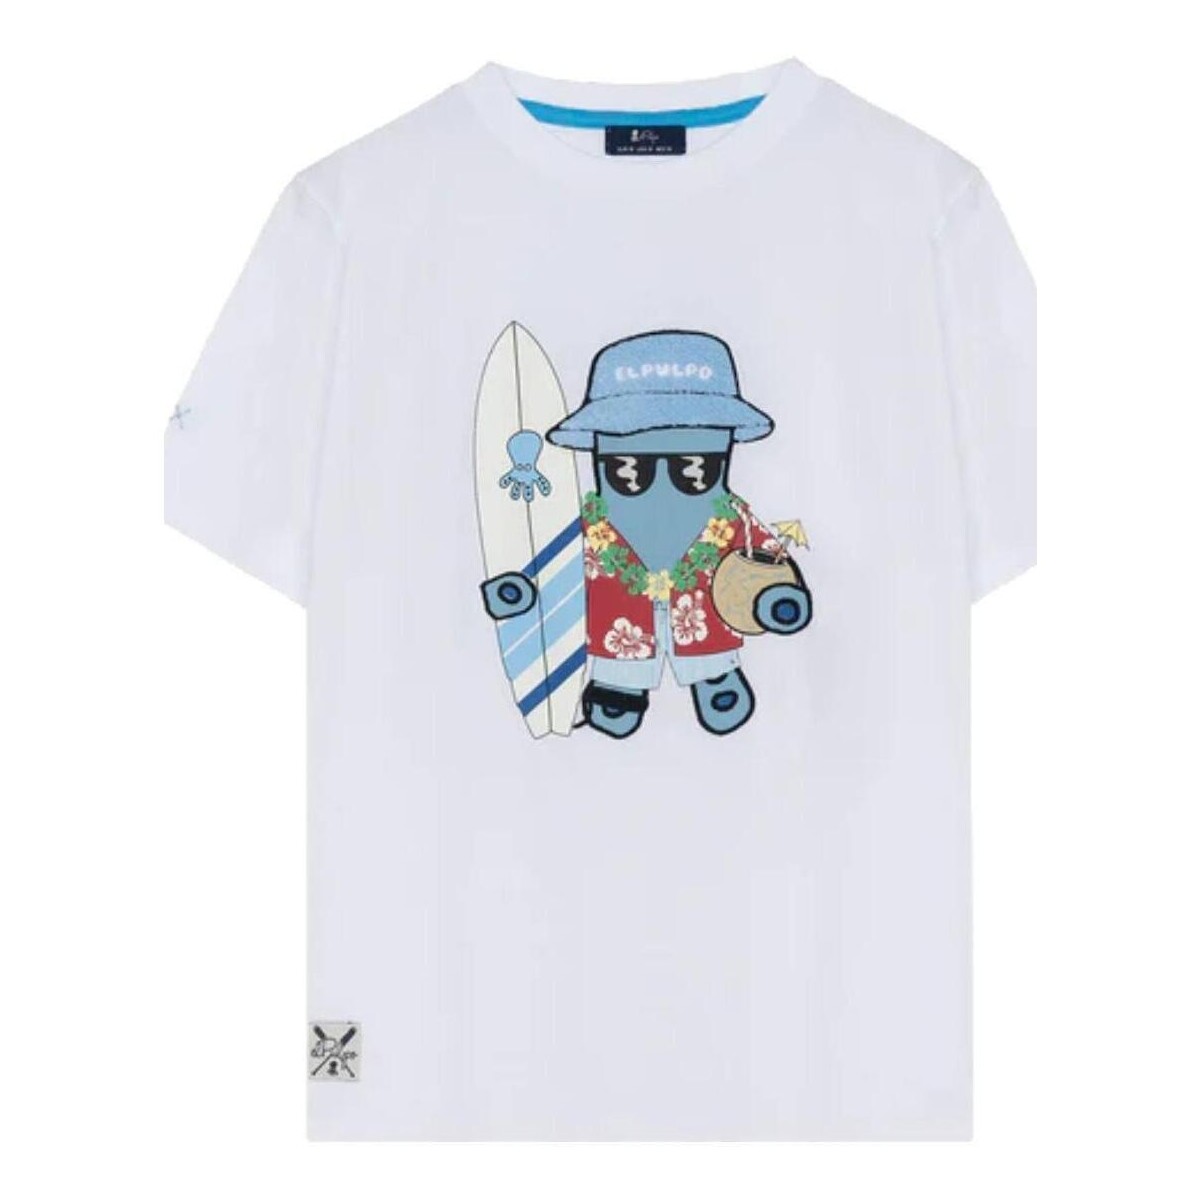 textil Niño Camisetas manga corta Elpulpo 17010124072100 Blanco